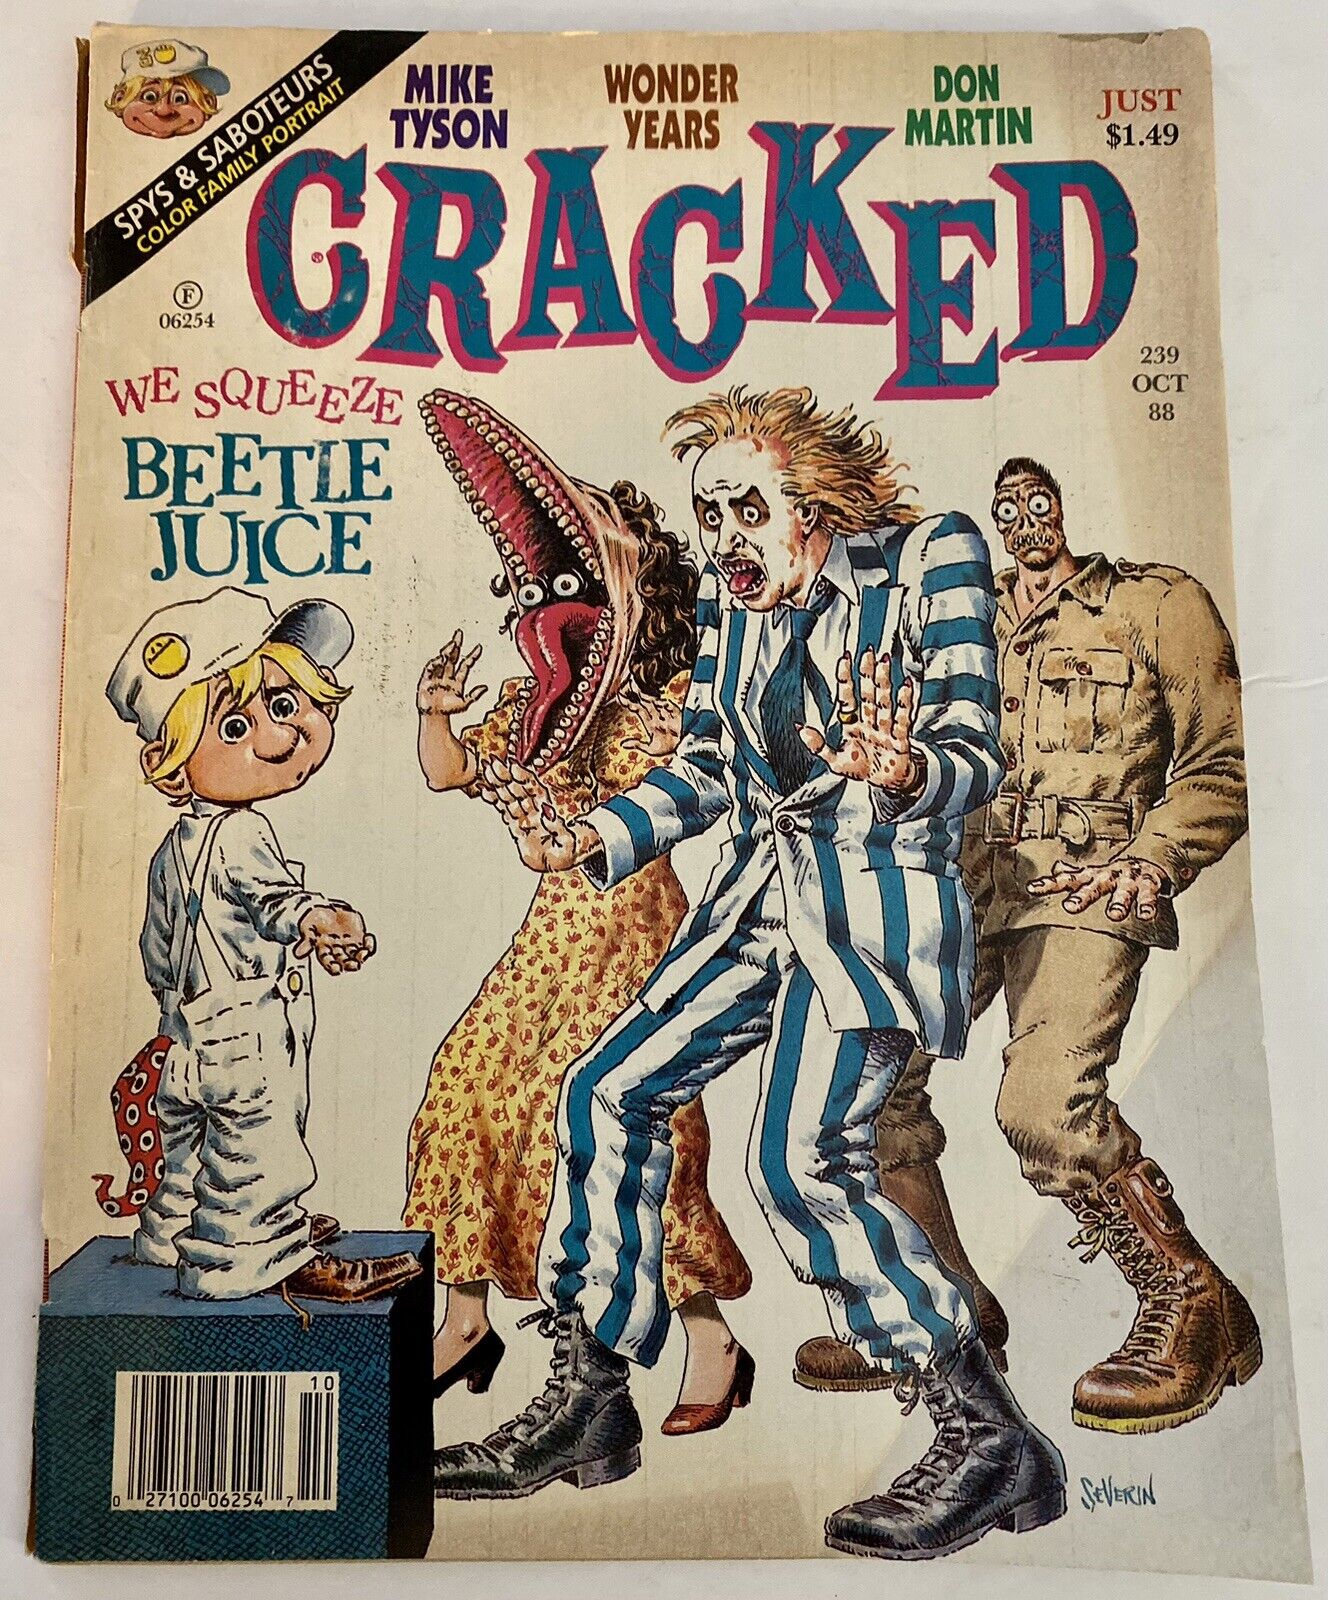 Vintage CRACKED Magazine Beetle Juice October 1988 #239